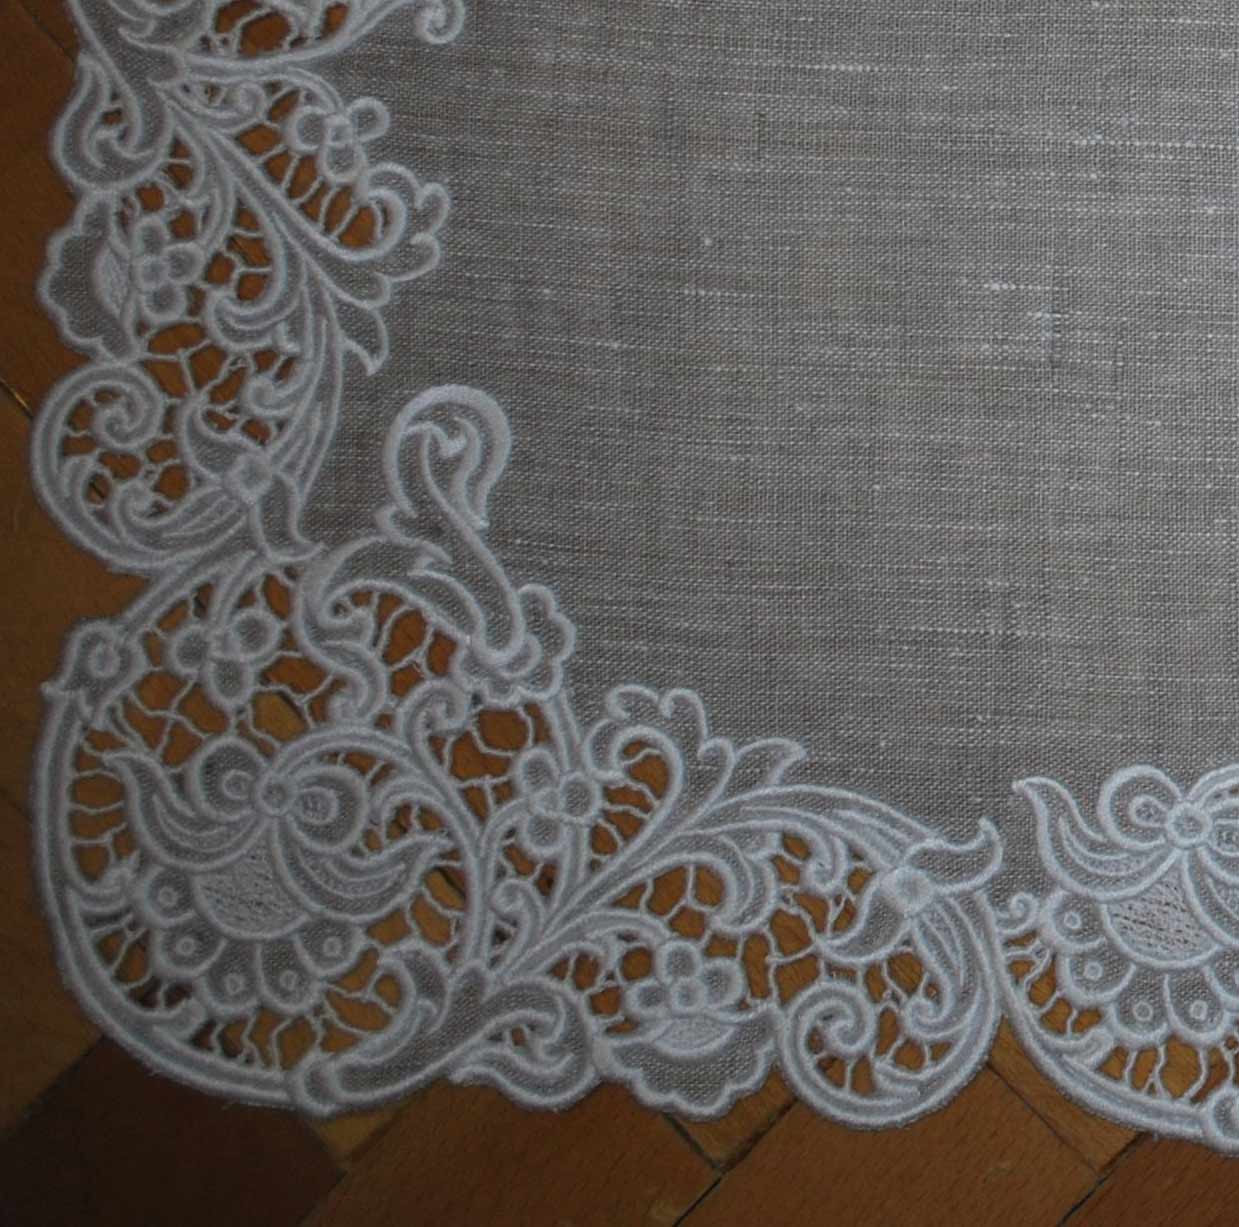 Cutwork napkin project embroidery design